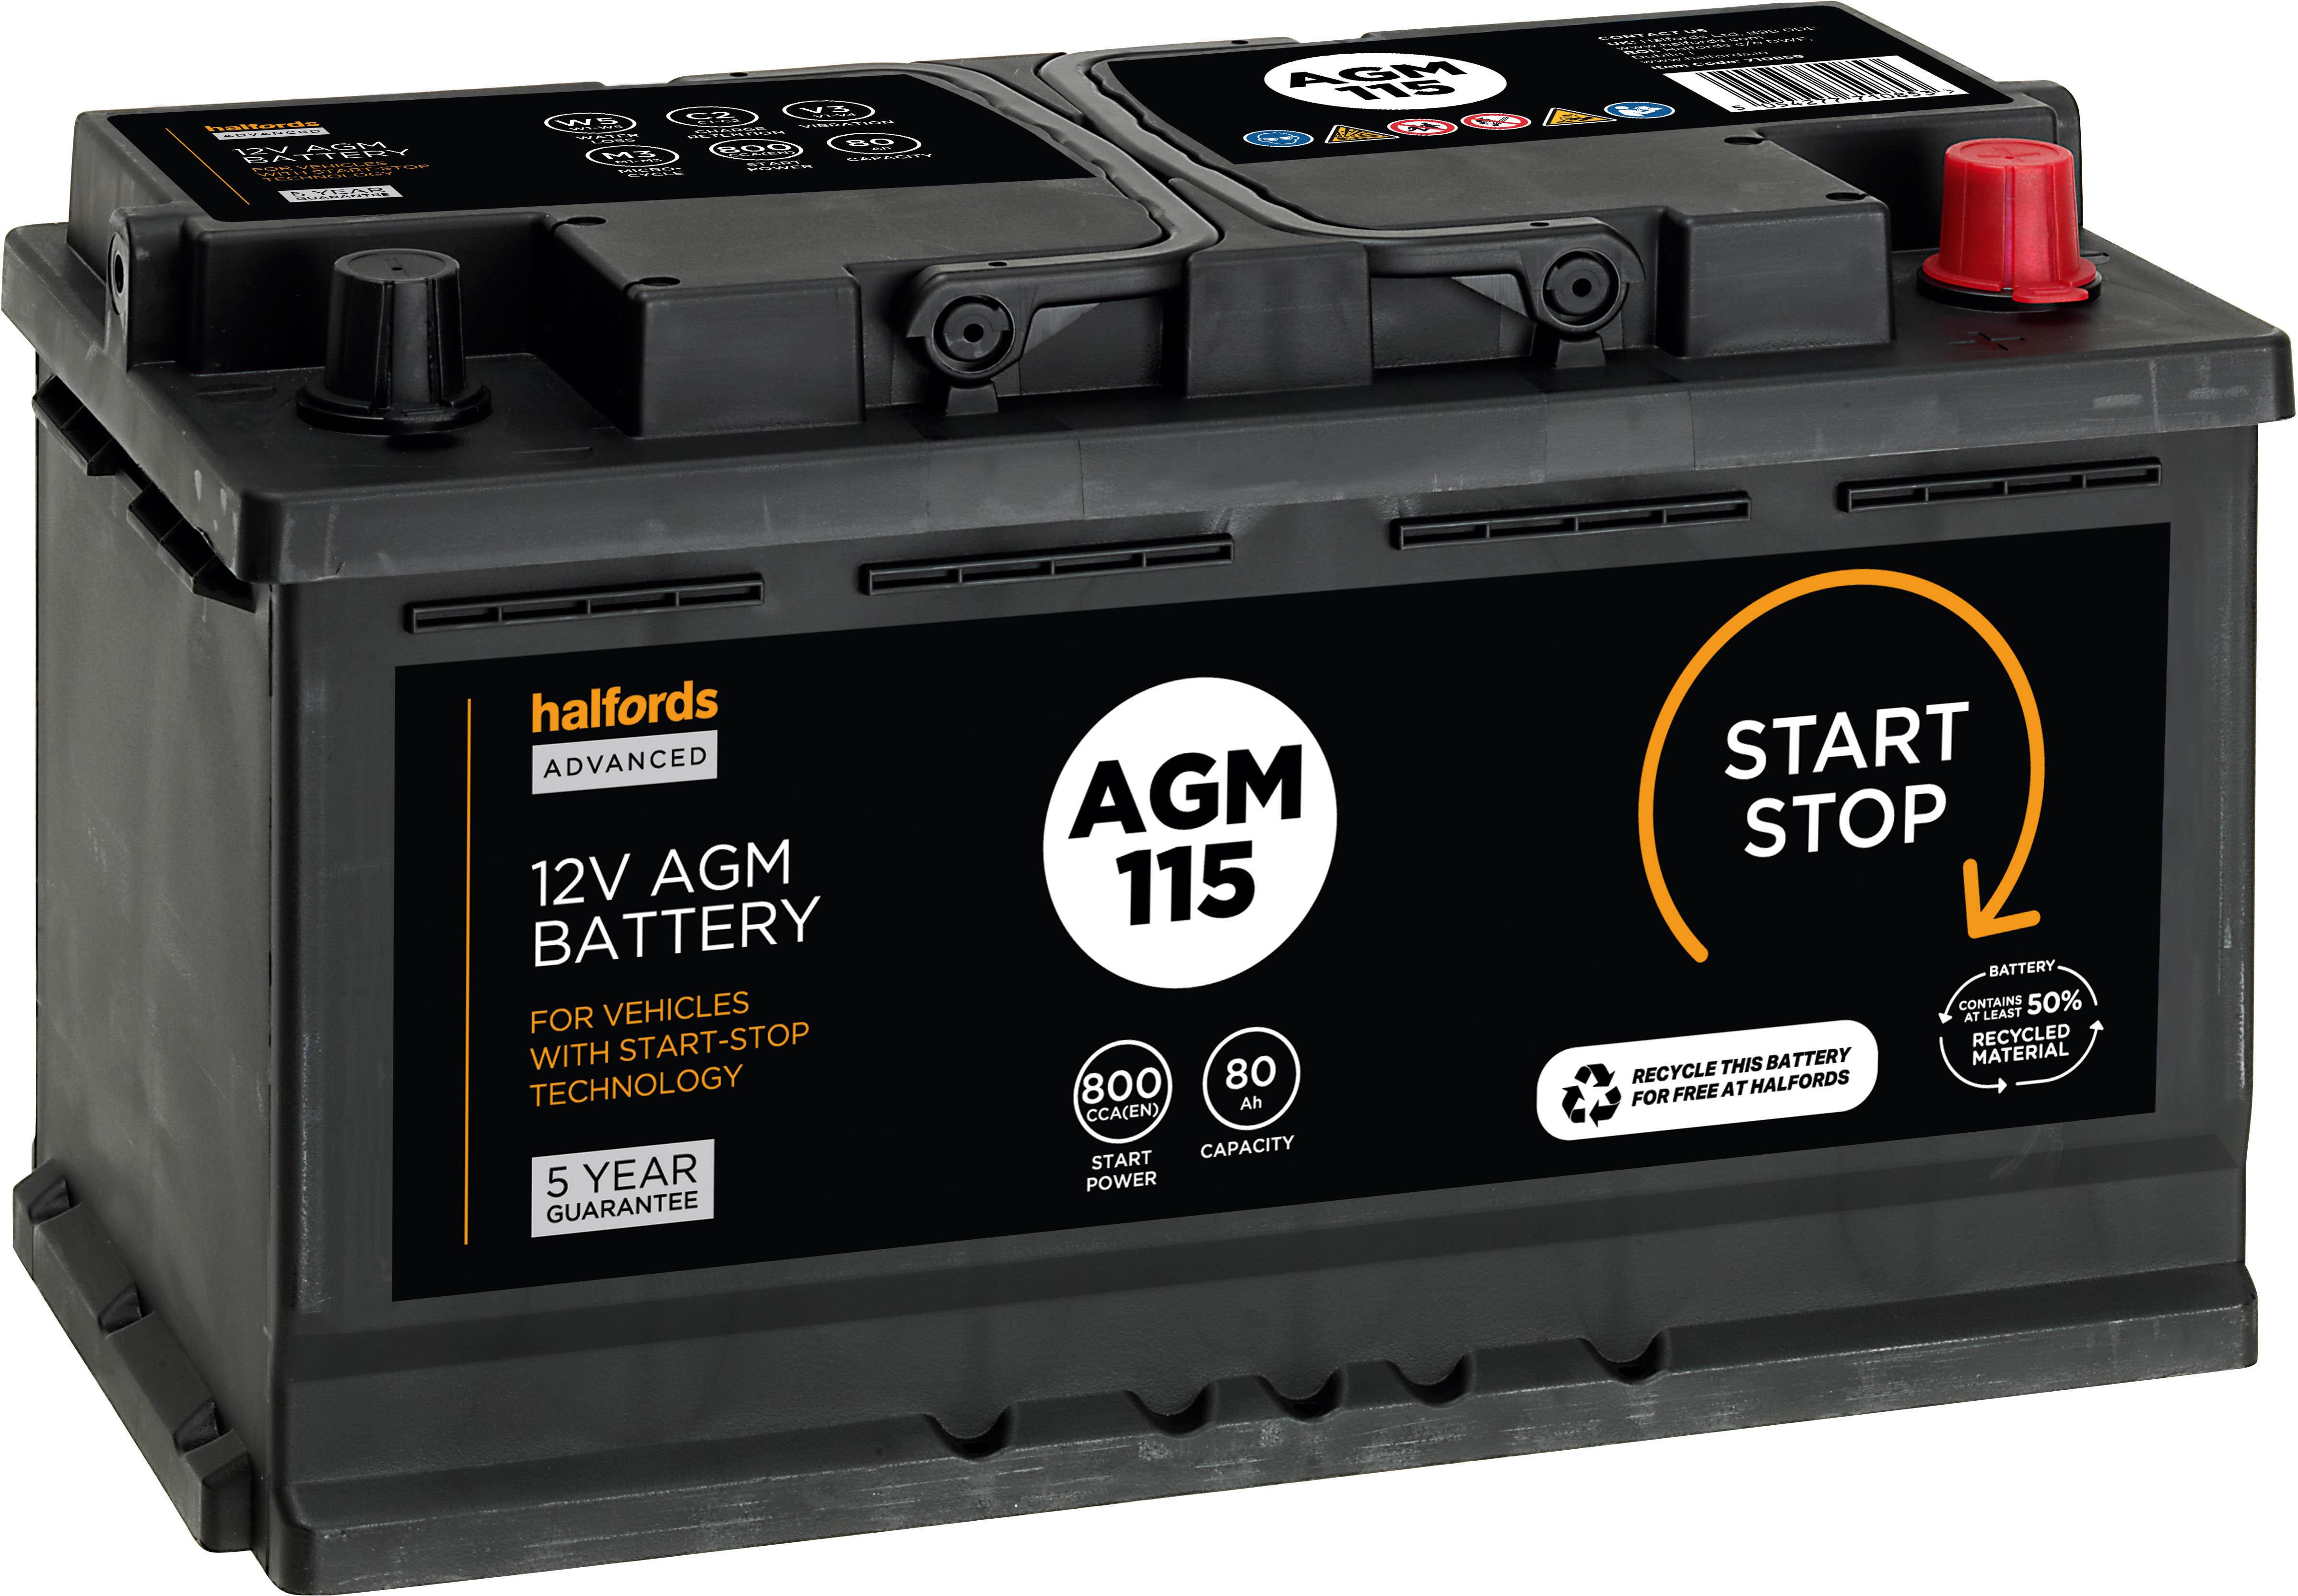 Halfords AGM115 Start/Stop 12V Car Battery Year Guarantee Halfords UK